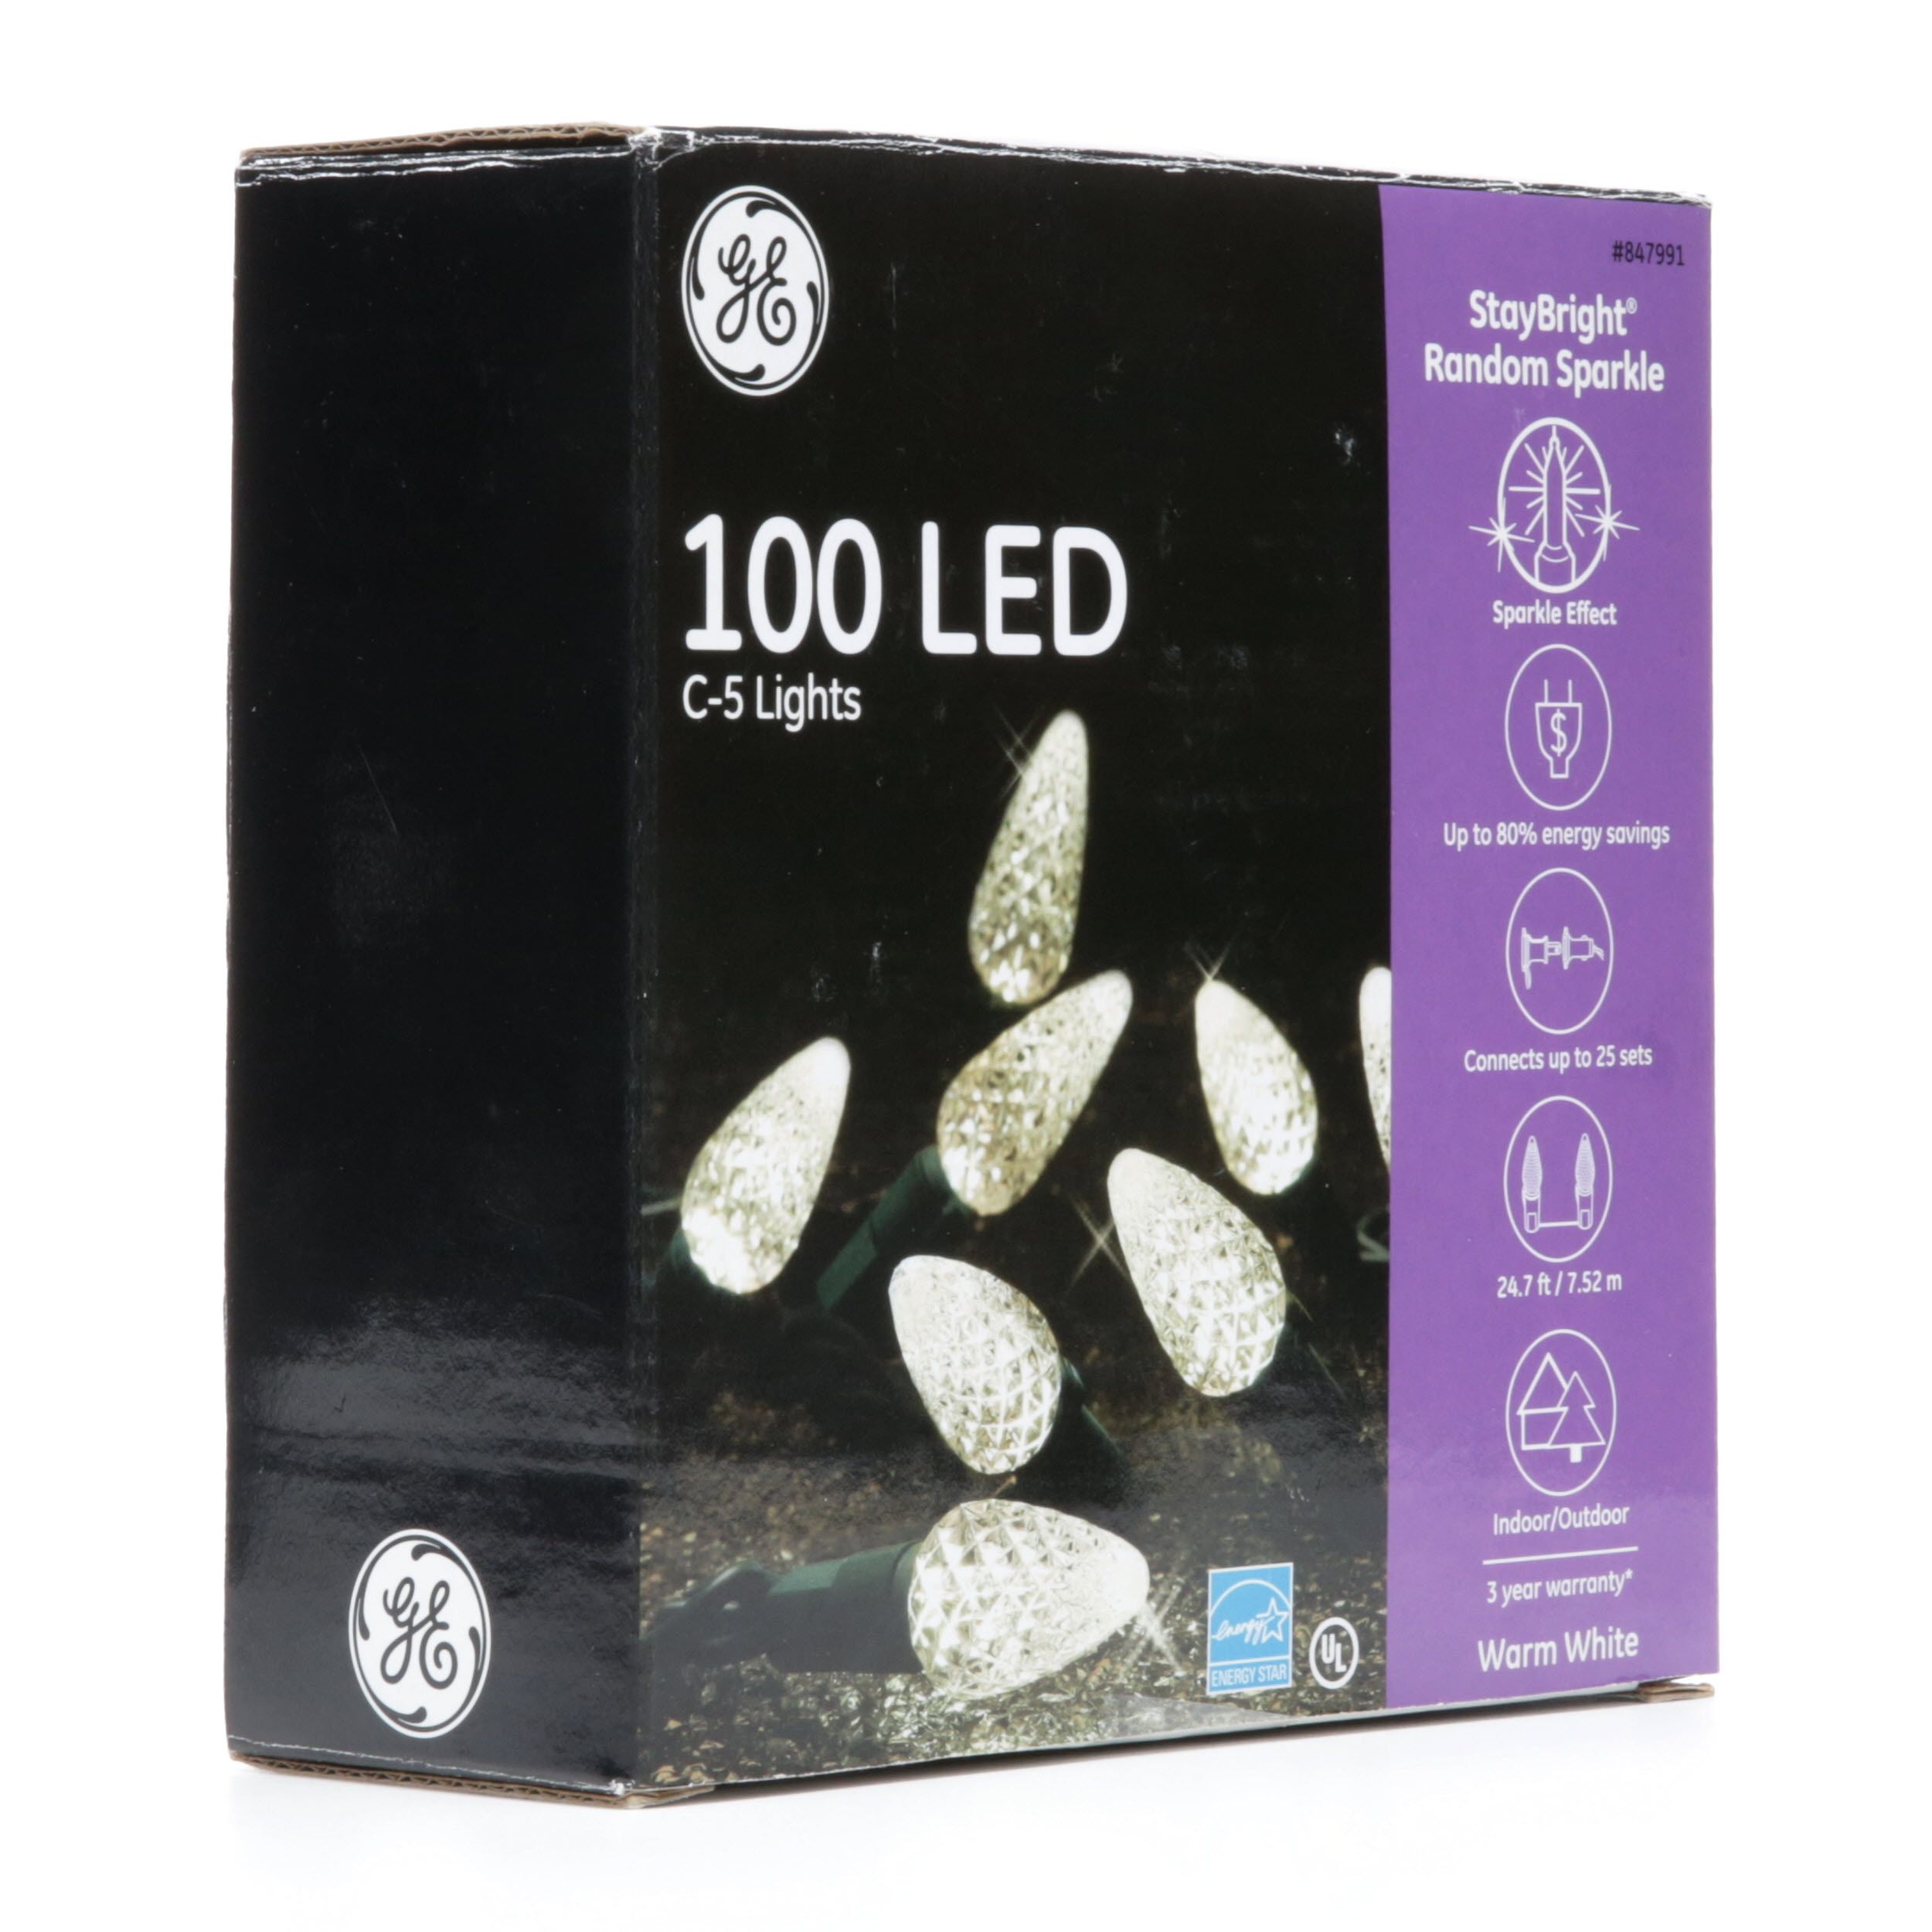 GE 100 LED StayBright Random Sparkle WARM WHITE C5 Lights 